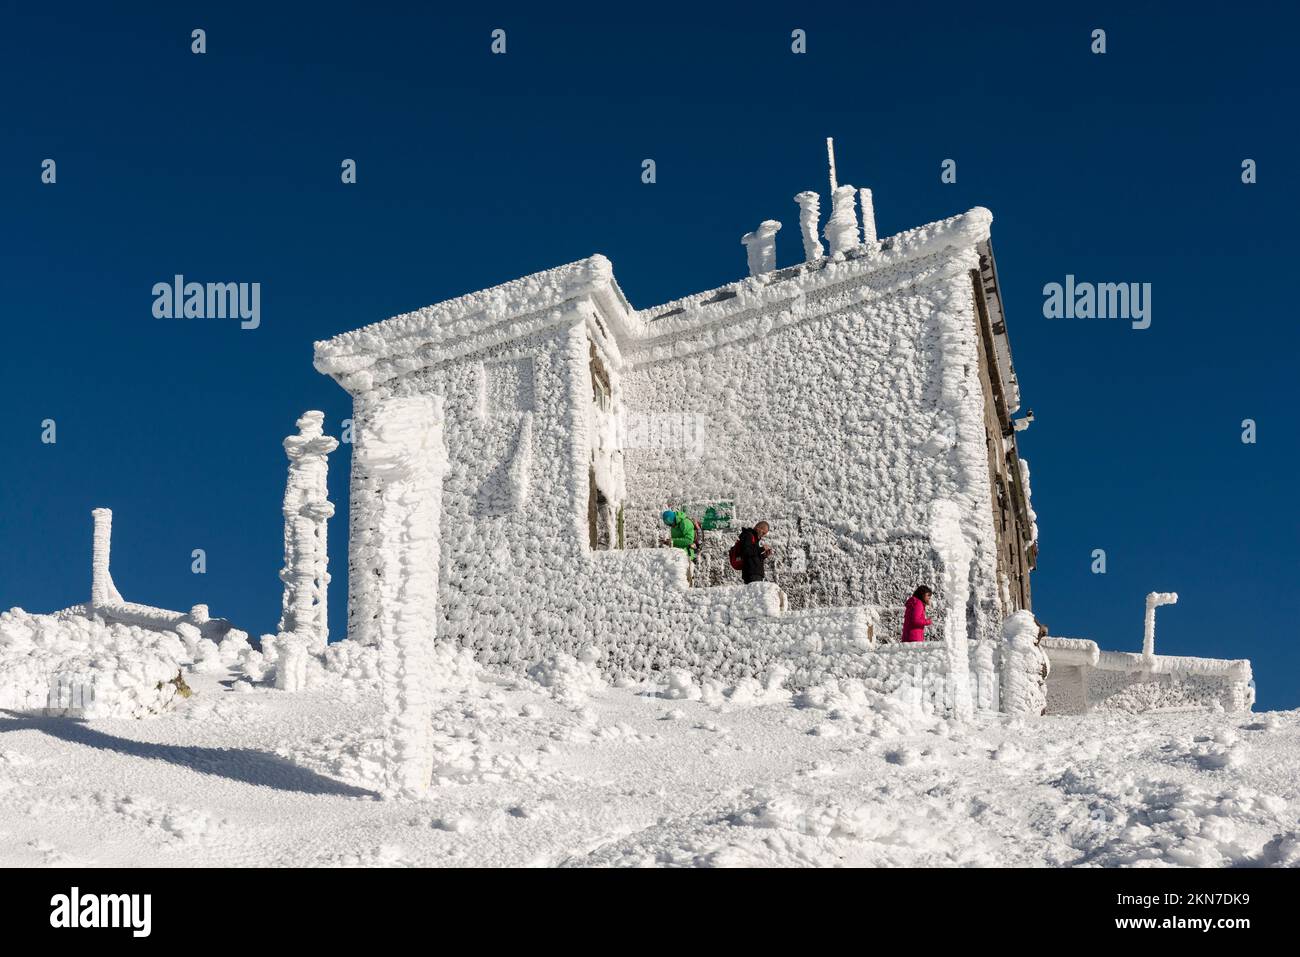 Erster Schnee an der Black Peak Hut bei 2290 m gegen den blauen Himmel, Vitosha-Berg bei Sofia, Bulgarien, Osteuropa, Balkan, EU Stockfoto